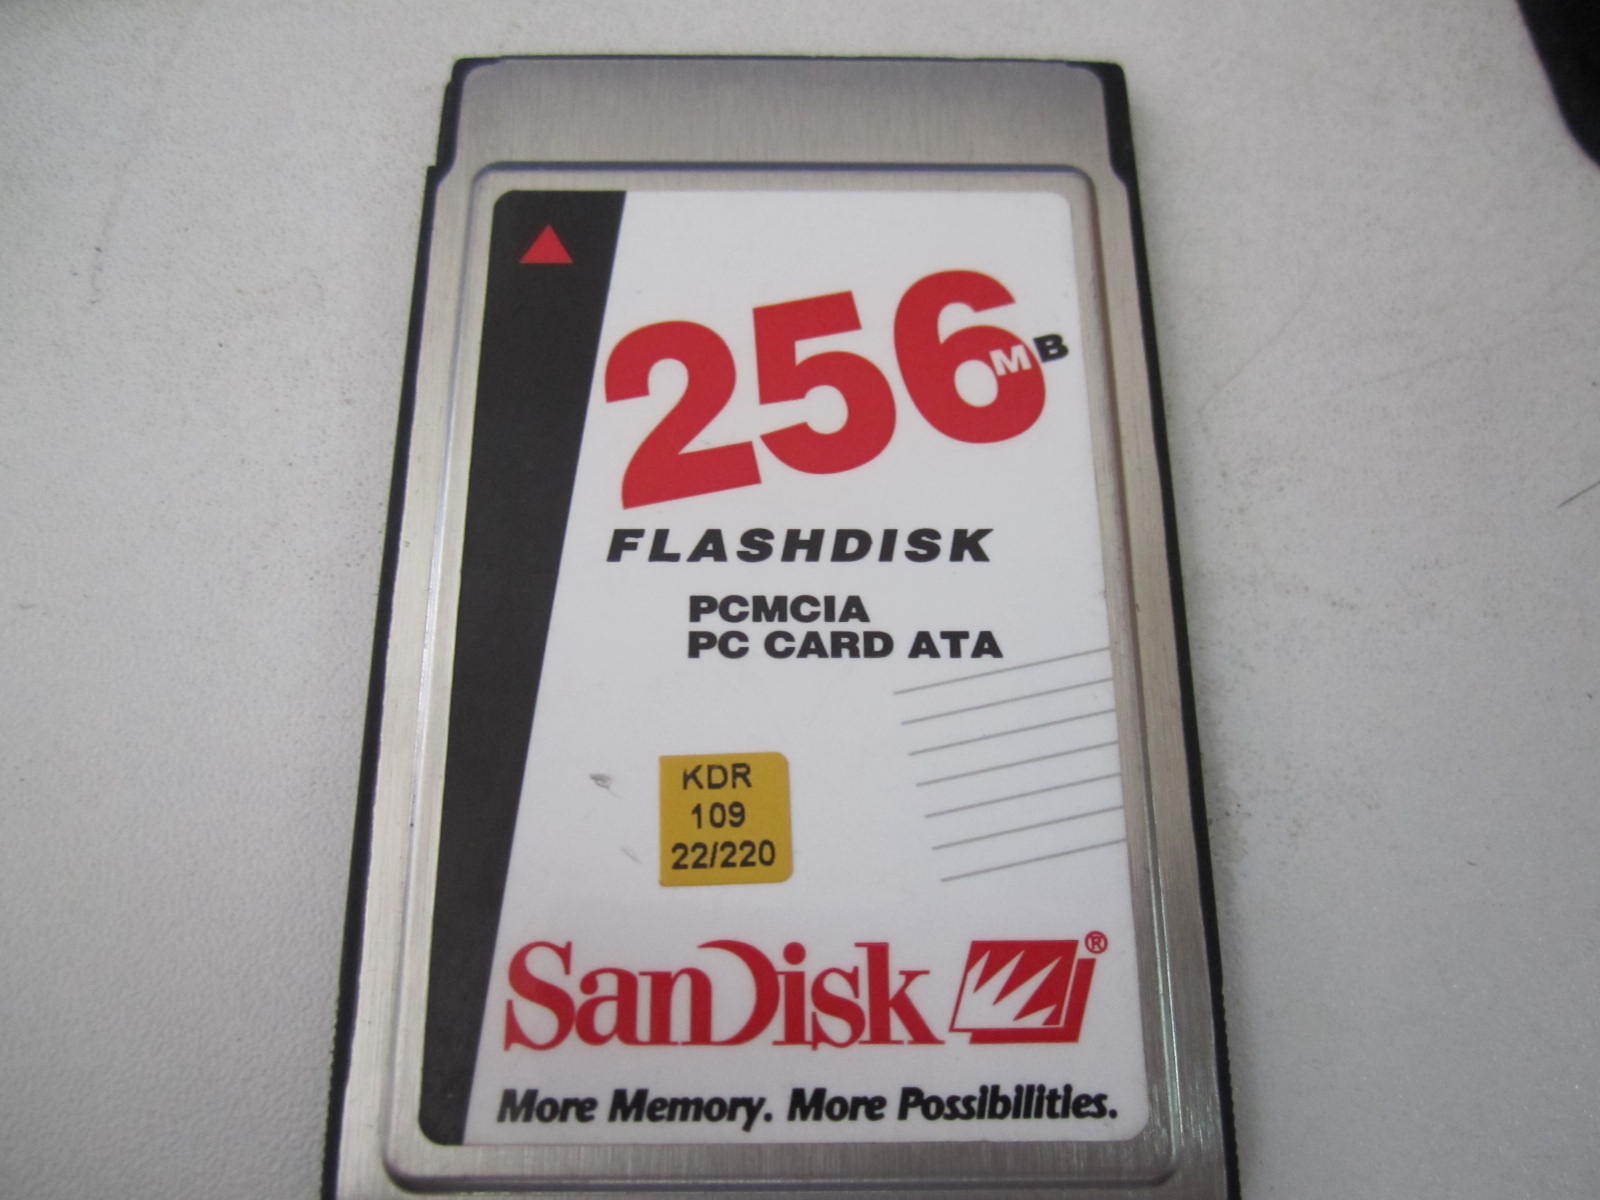 SanDisk 256mb PCMCIA PC Card ATA